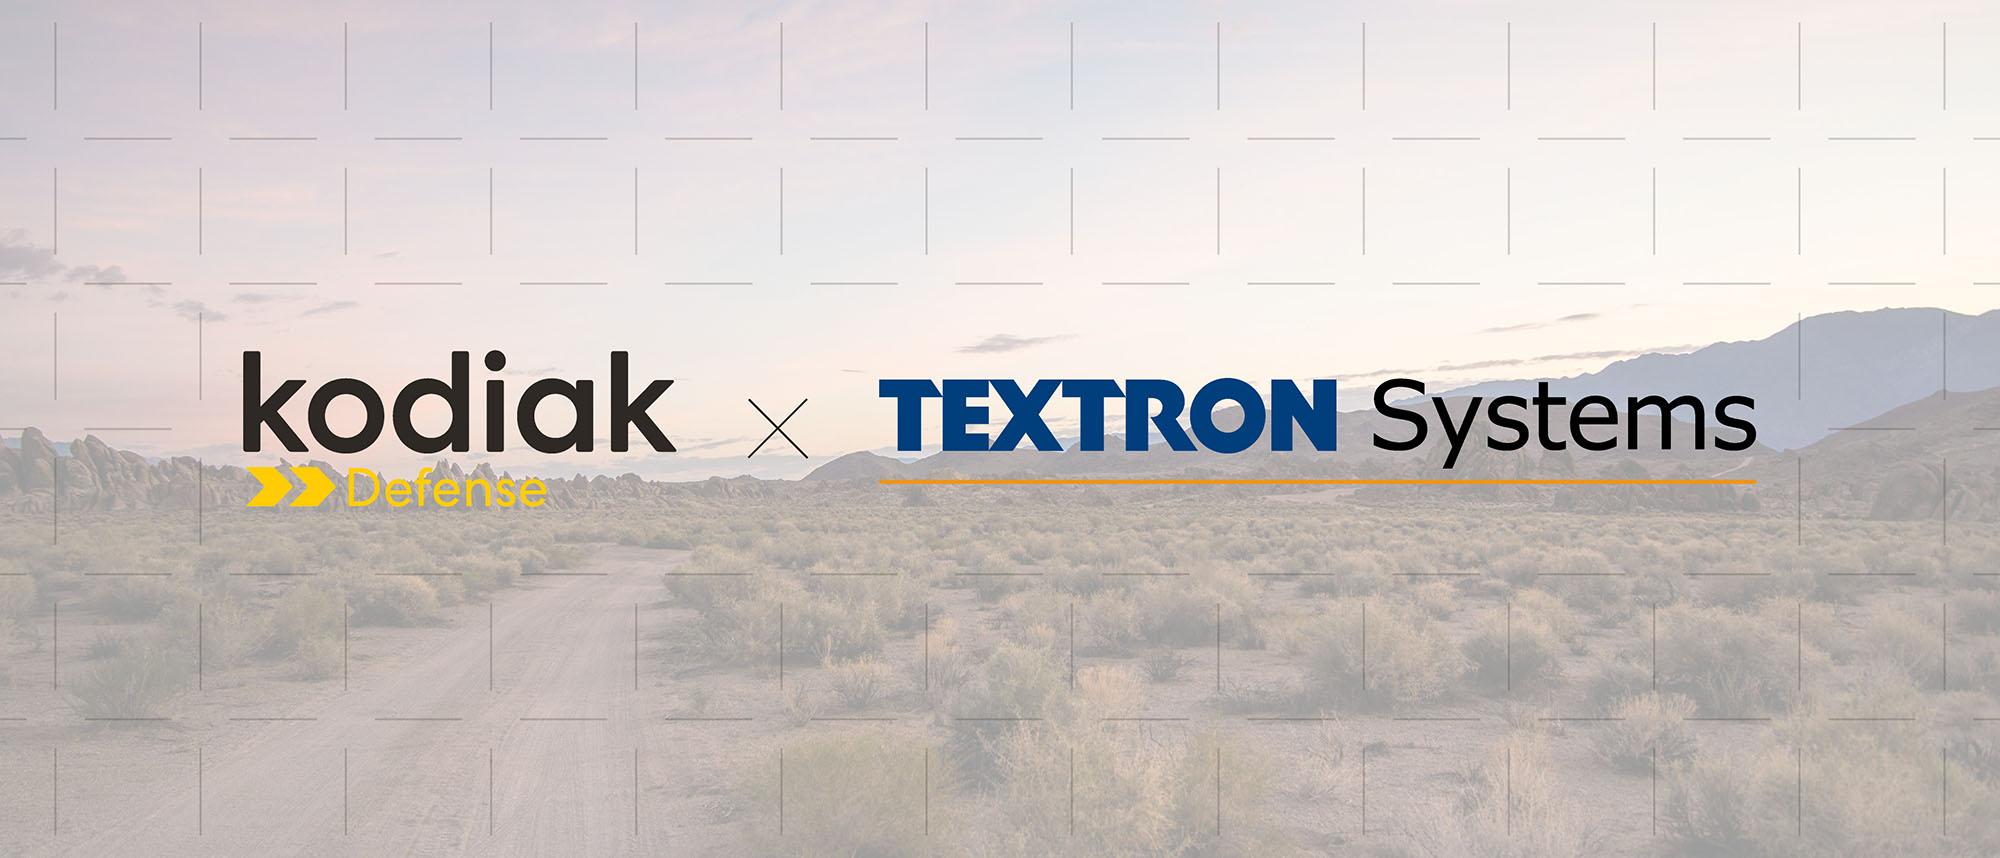 Kodiak-defense and Textron Systems Logos